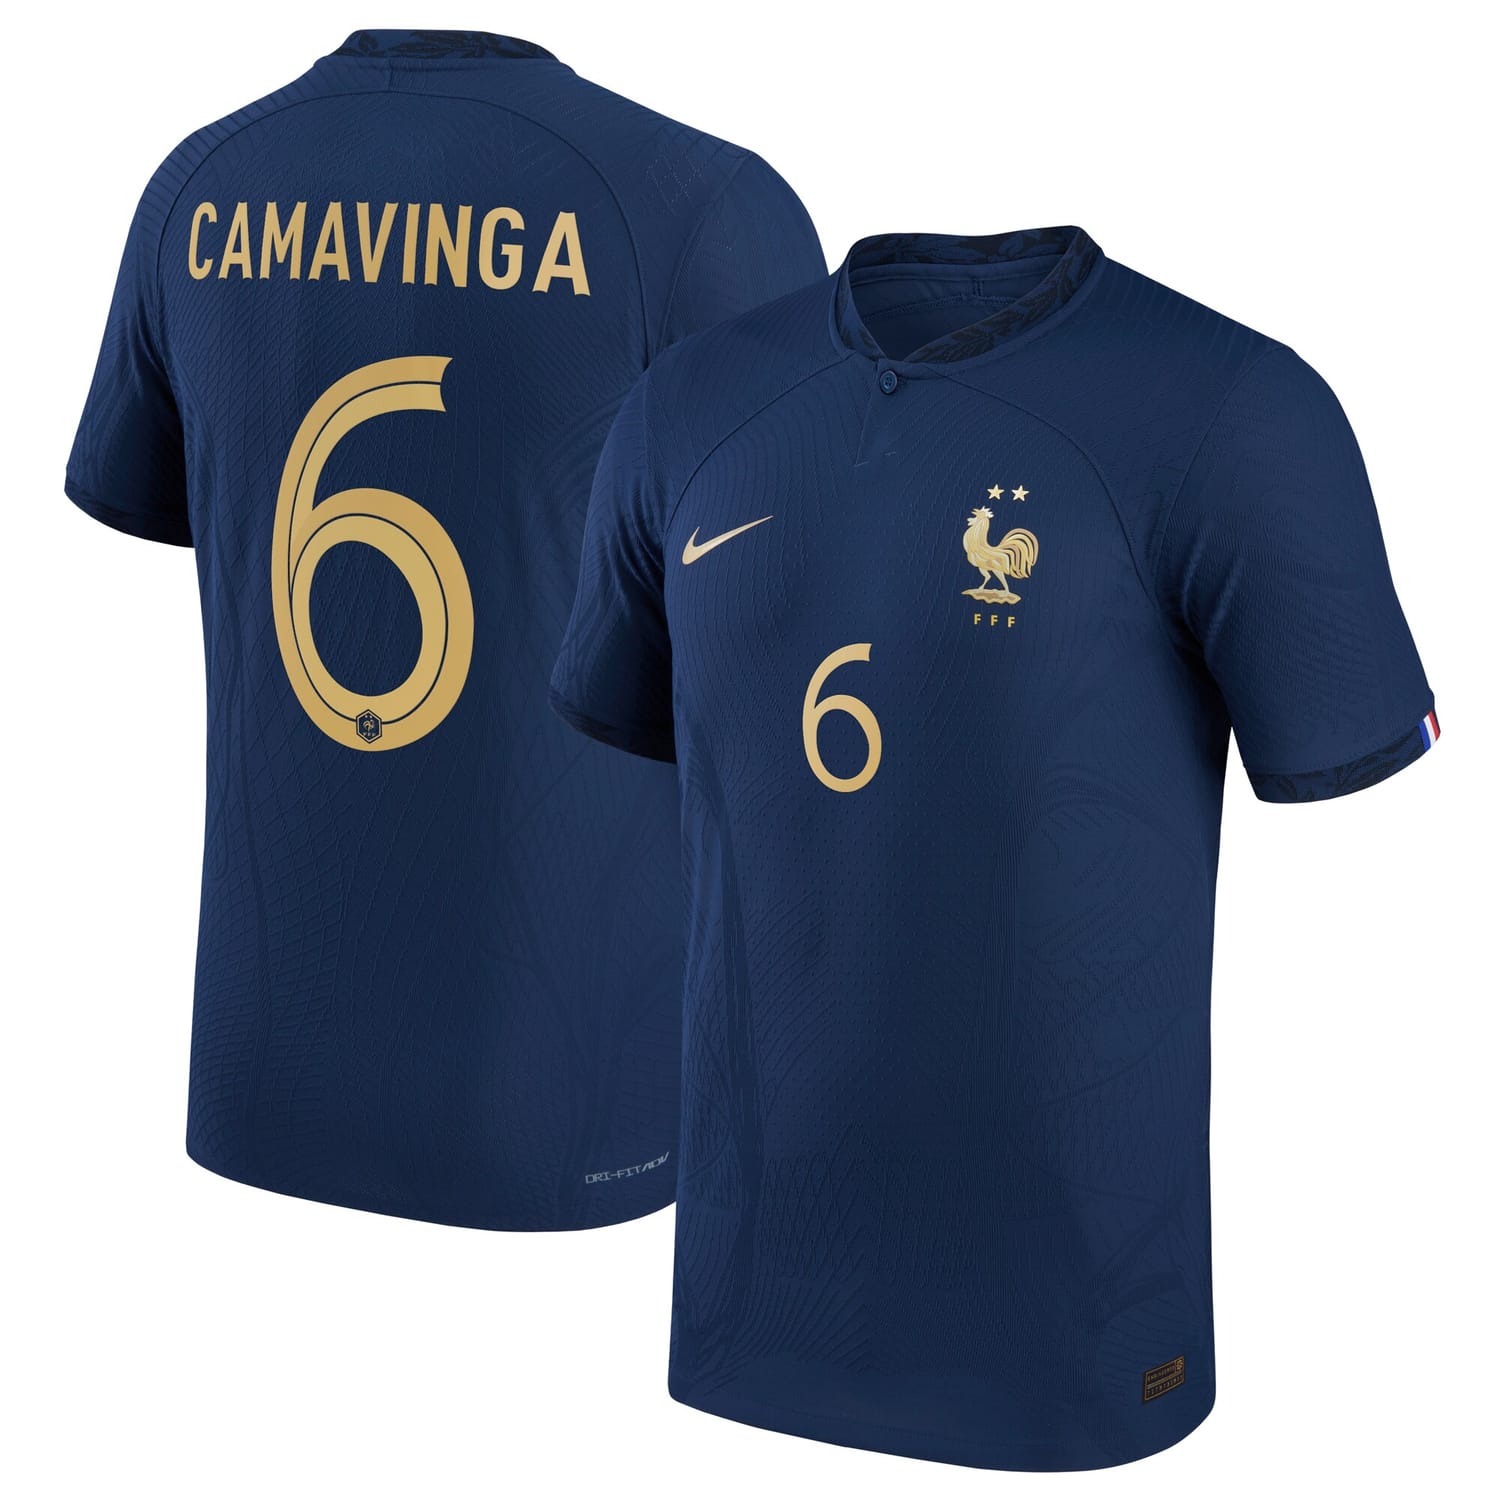 France National Team Home Authentic Jersey Shirt 2022 player Camavinga 6 printing for Men